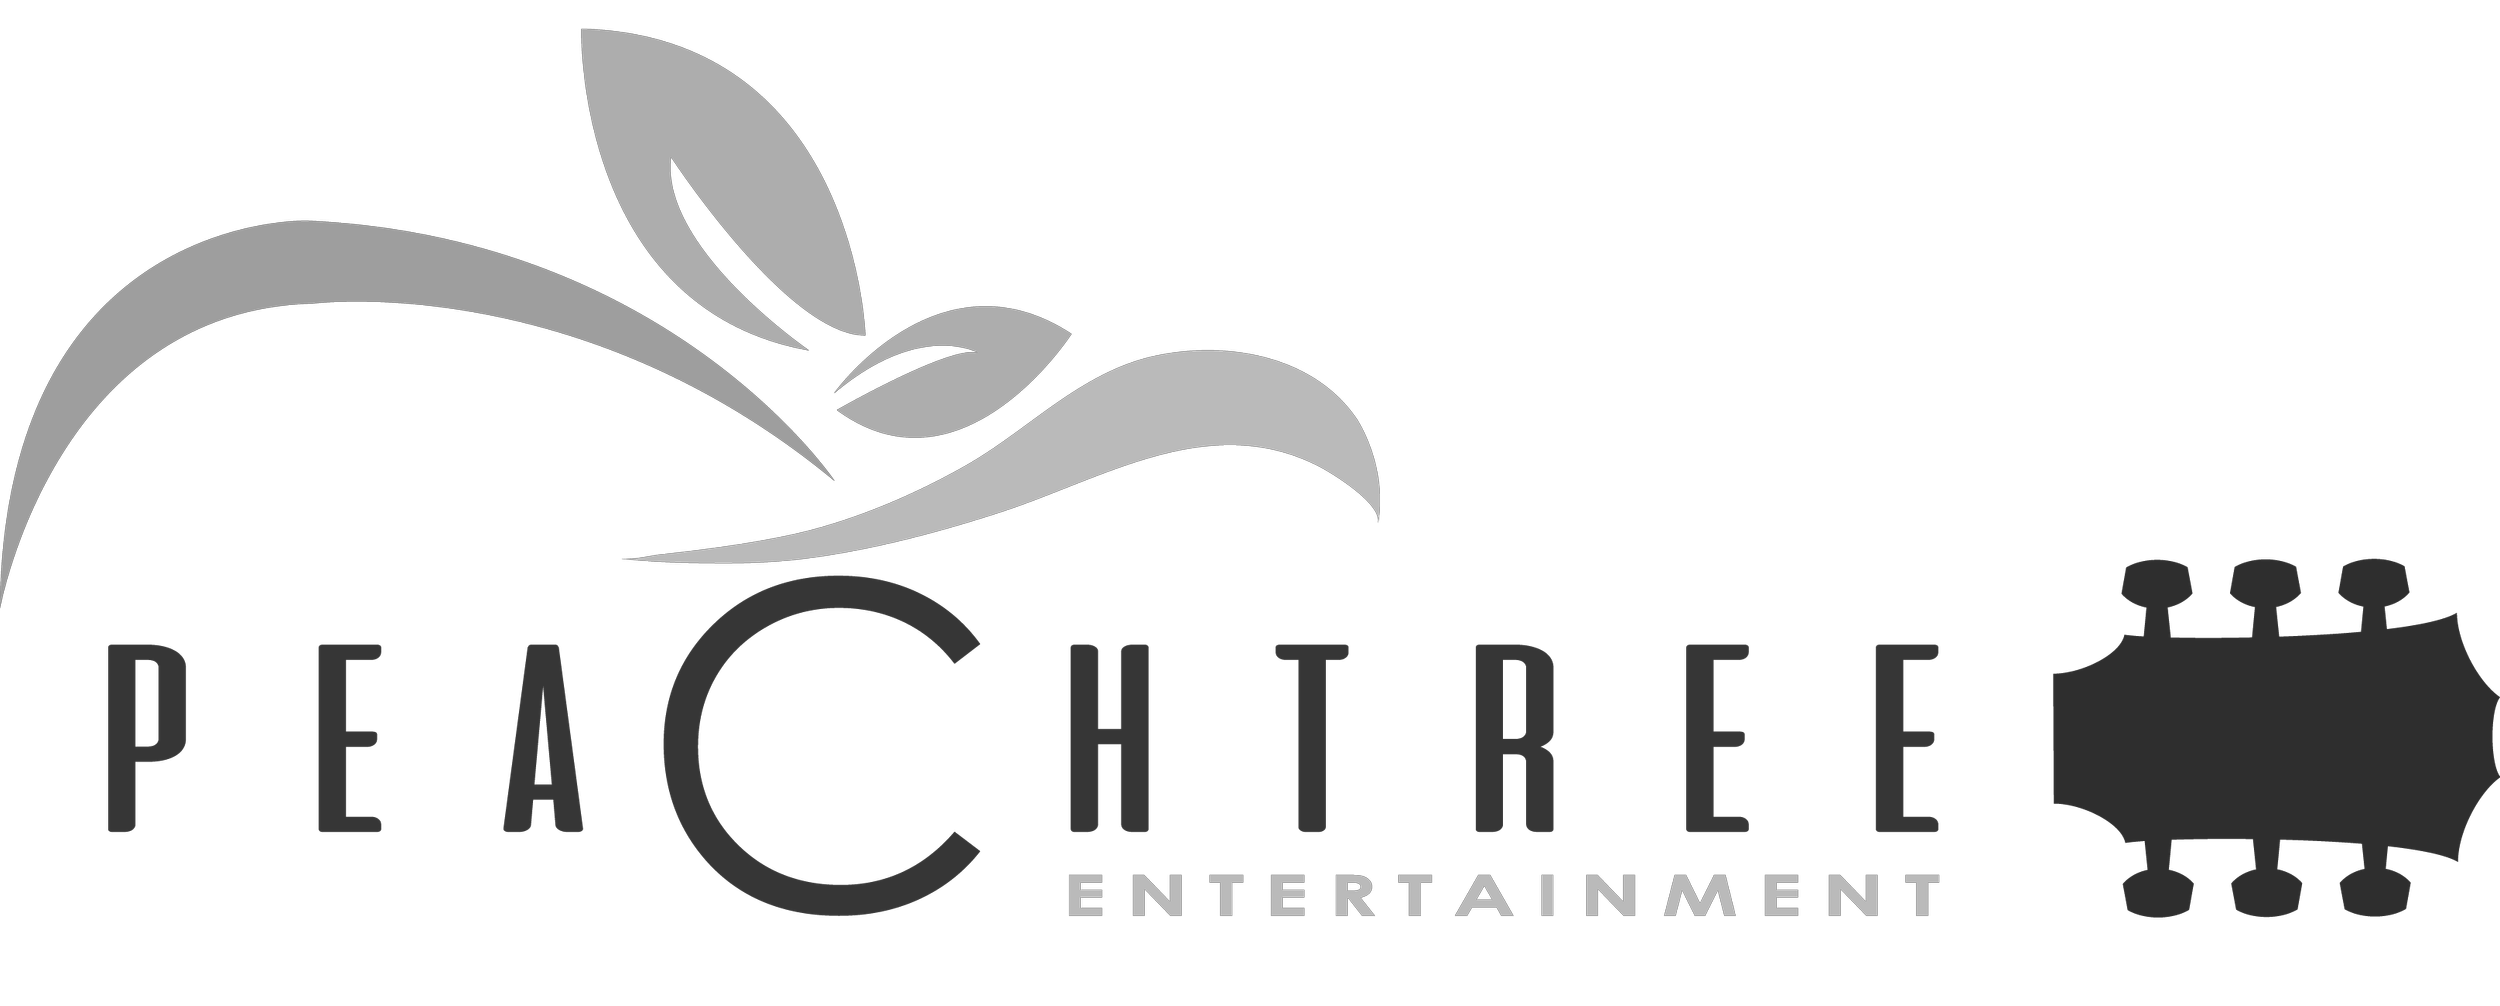 Peachtree Entertainment